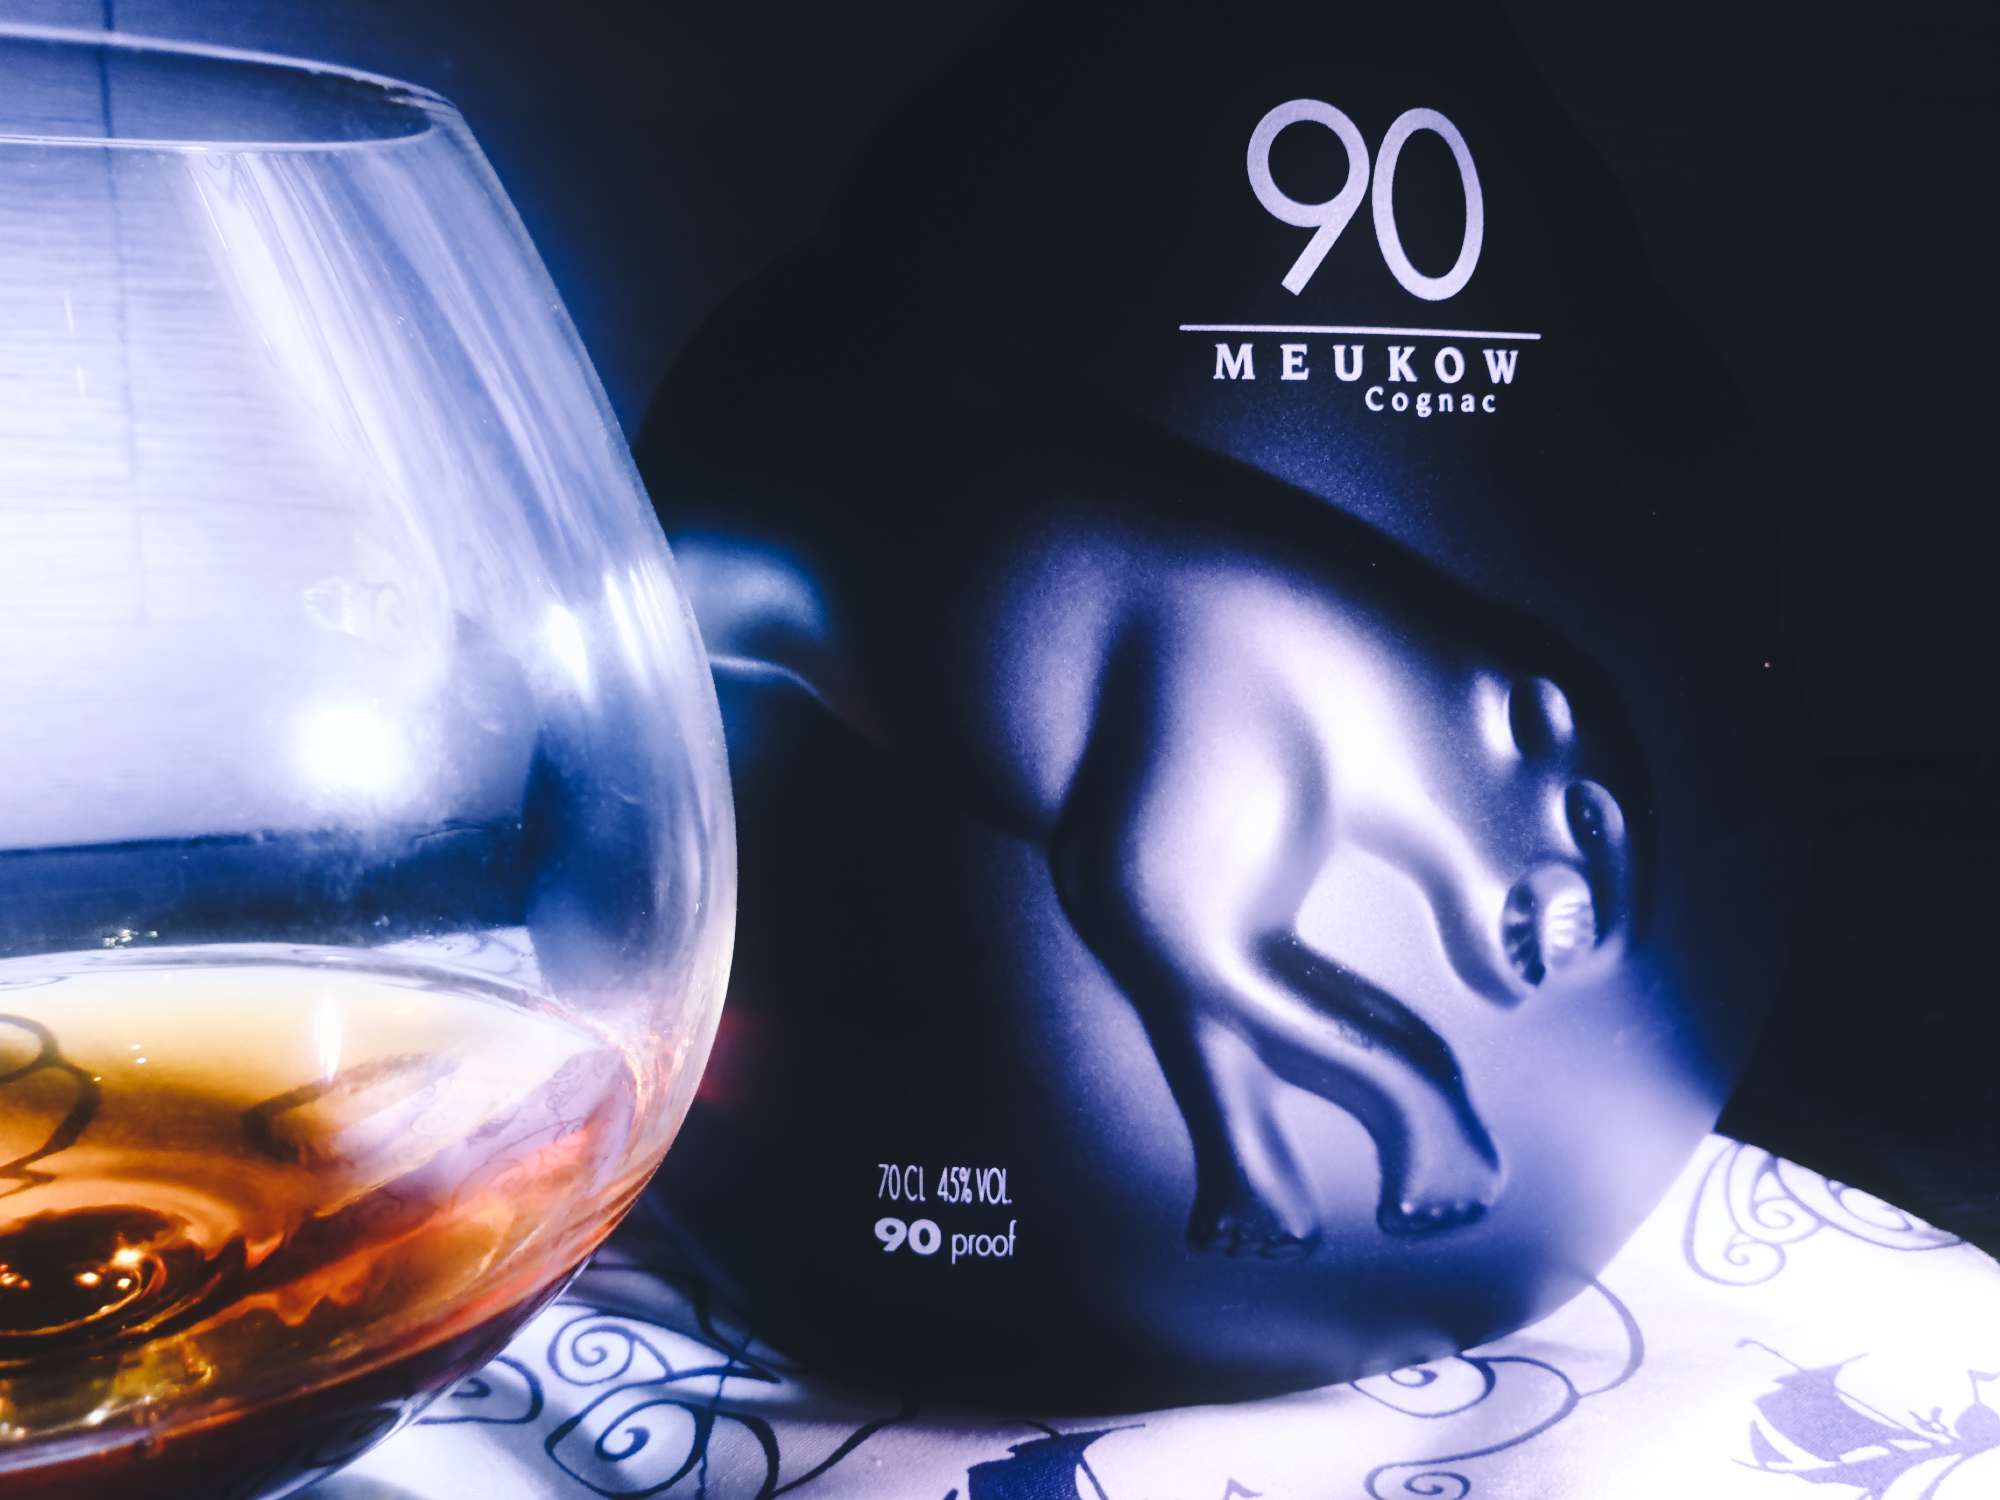 Meukow 90 Cognac – jung, wild, opulent – Tasting Review